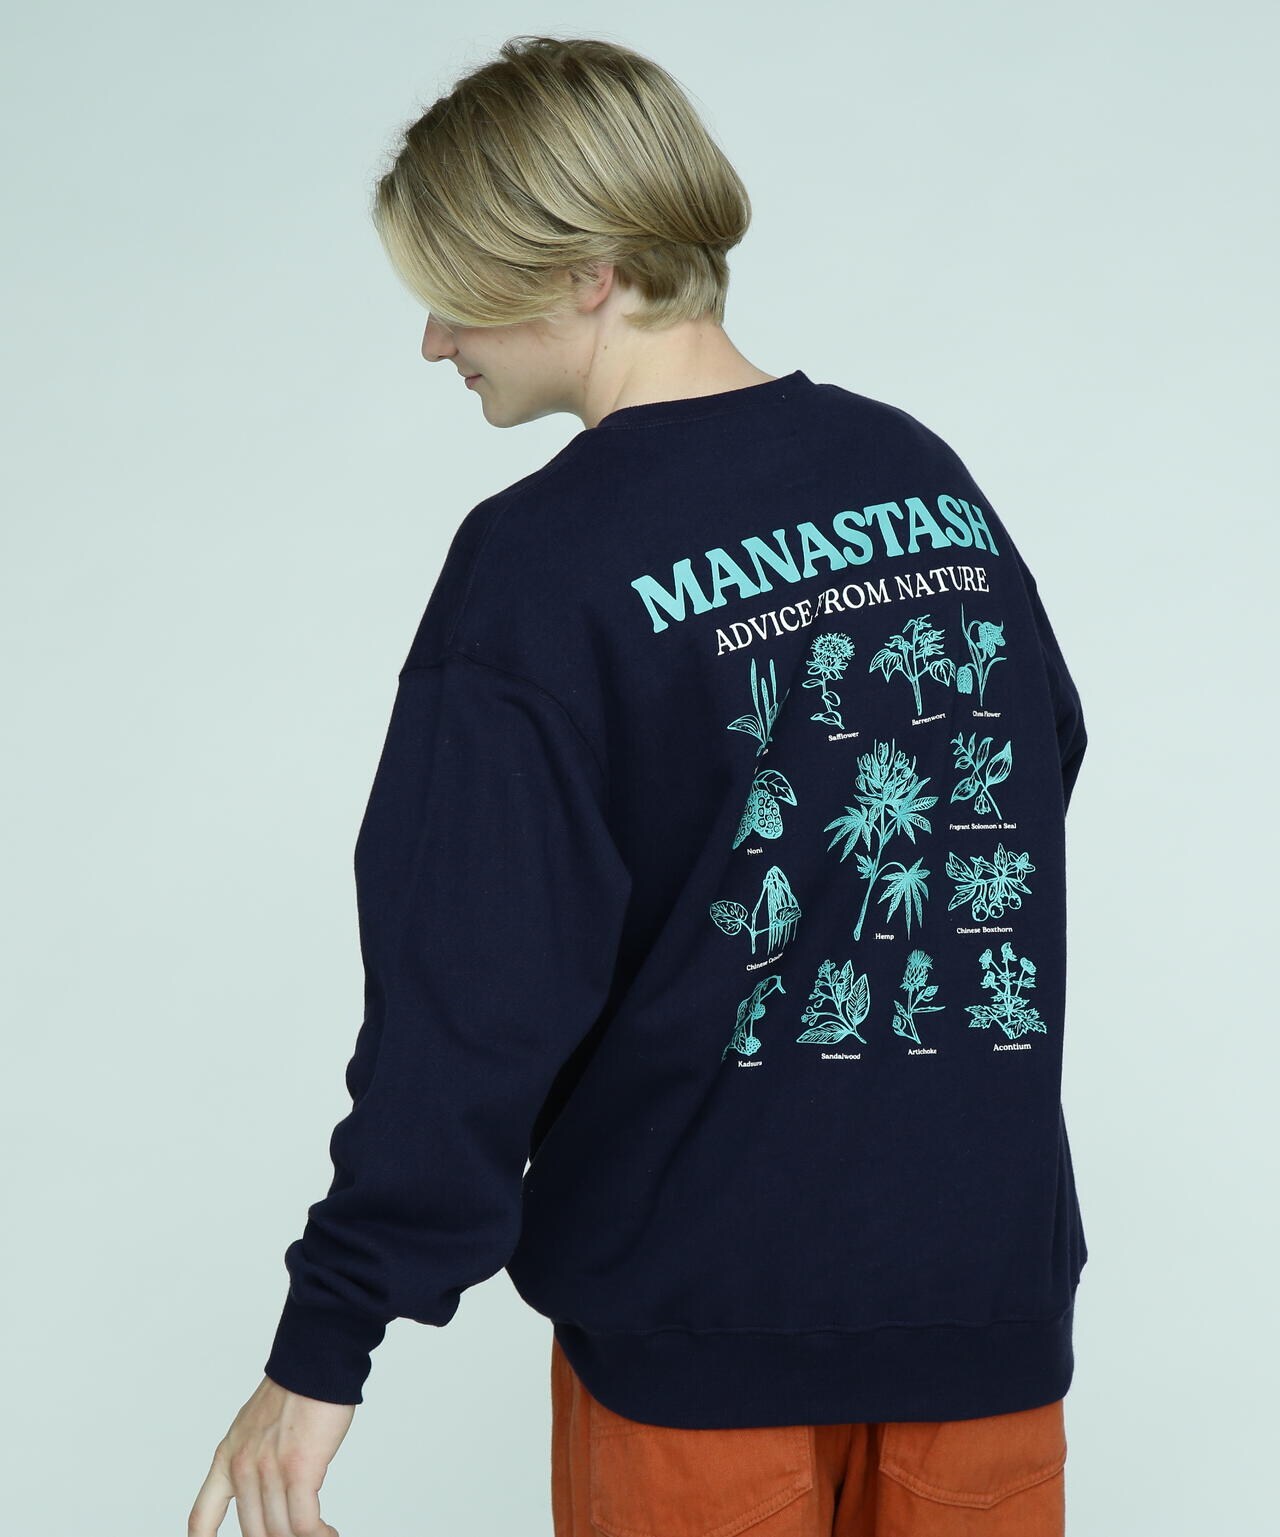 MANASTASH/マナスタッシュ/CASCADE SWEATSHIRTS AFN | MANASTASH